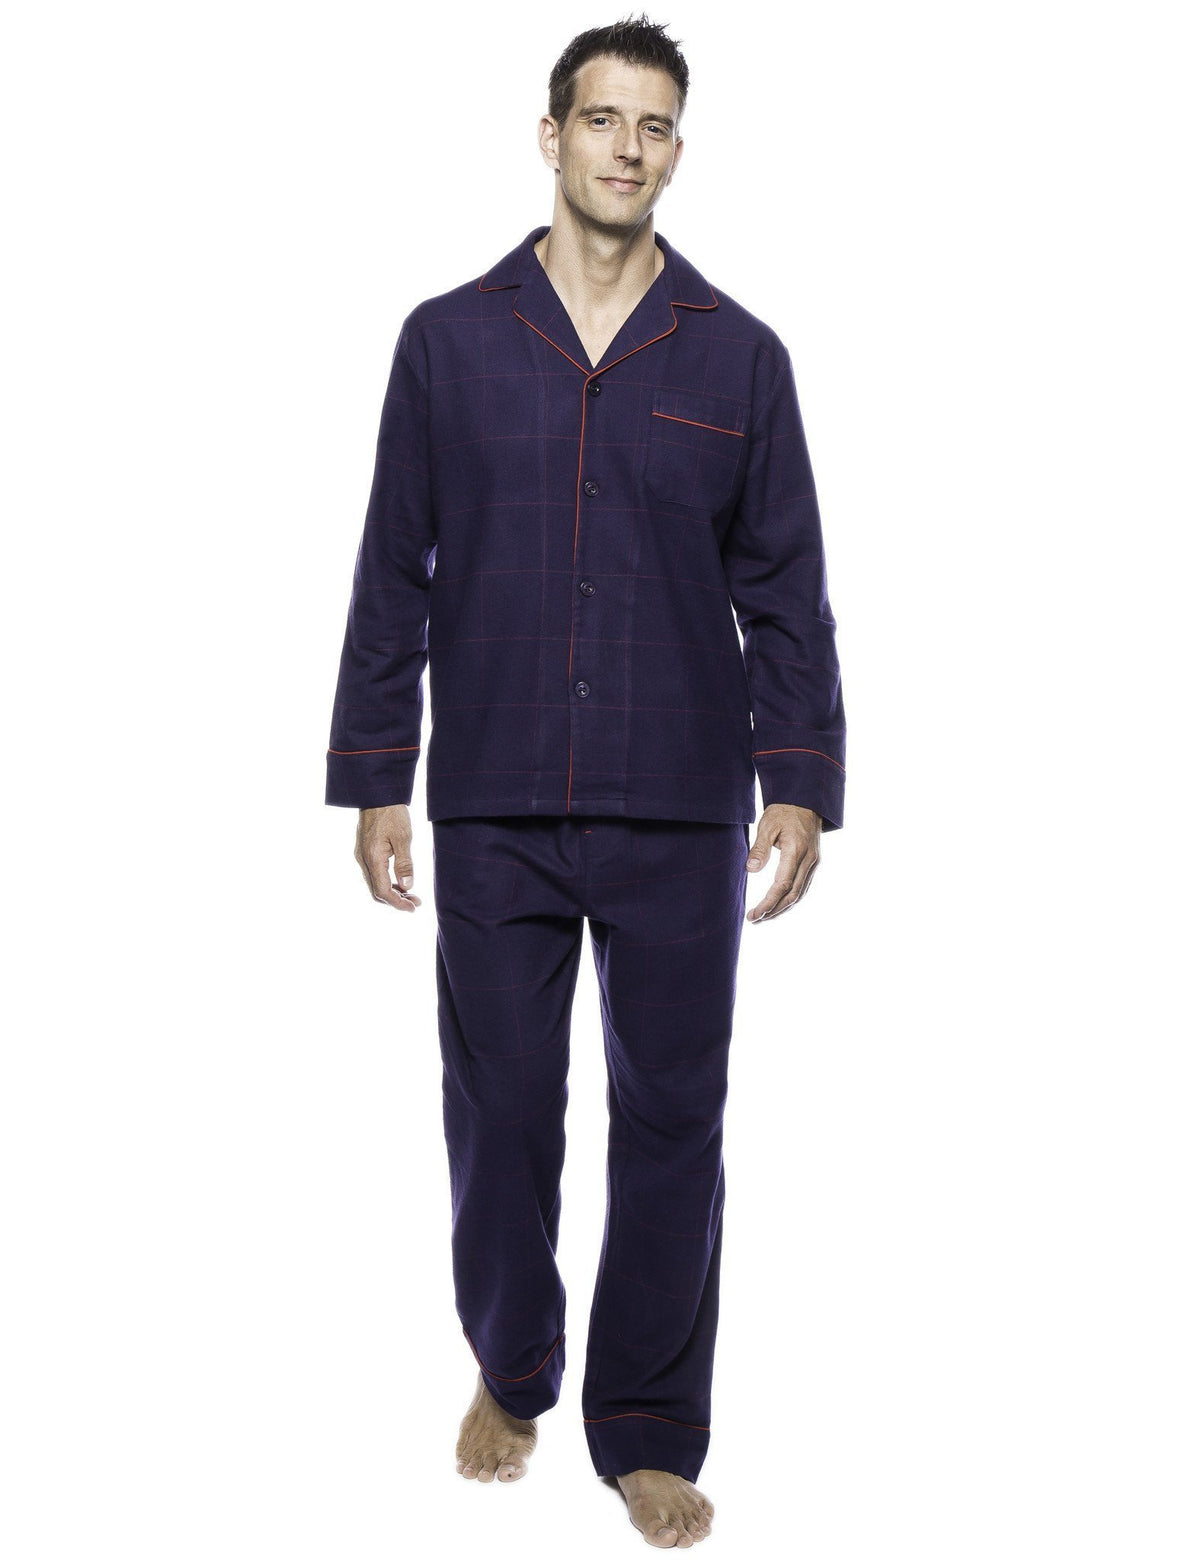 Box Packaged Men's Premium 100% Cotton Flannel Pajama Sleepwear Set - Windowpane Checks Blue/Red